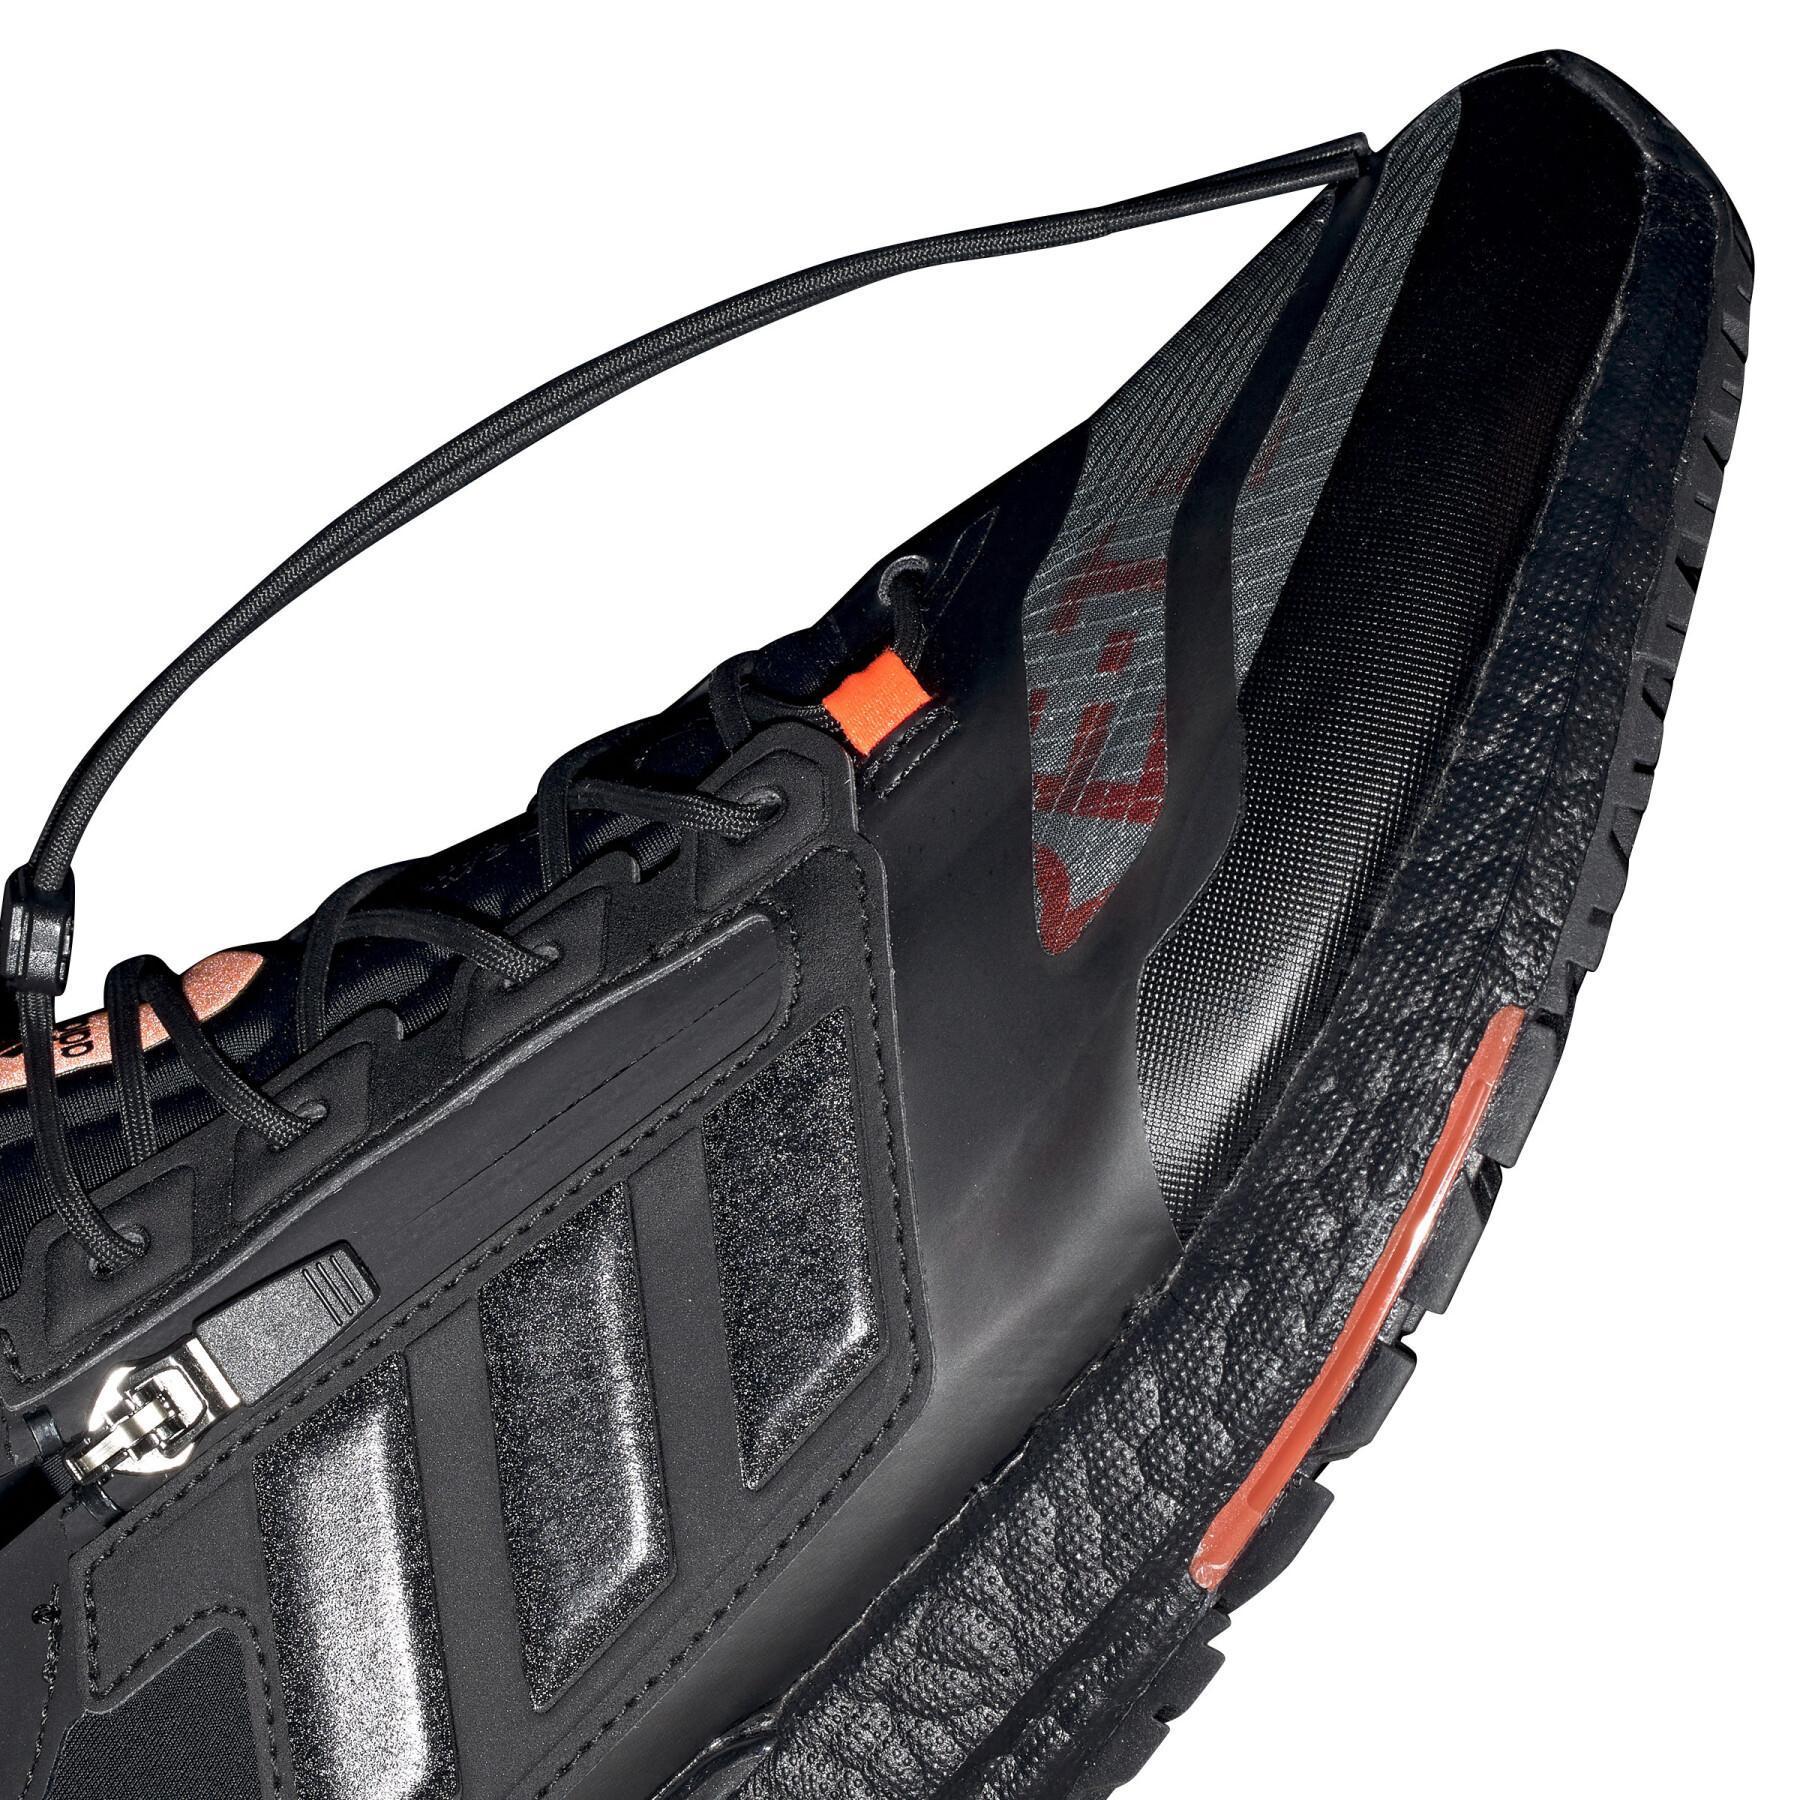 Zapatillas de running adidas Ultraboost 21 GORE-TEX